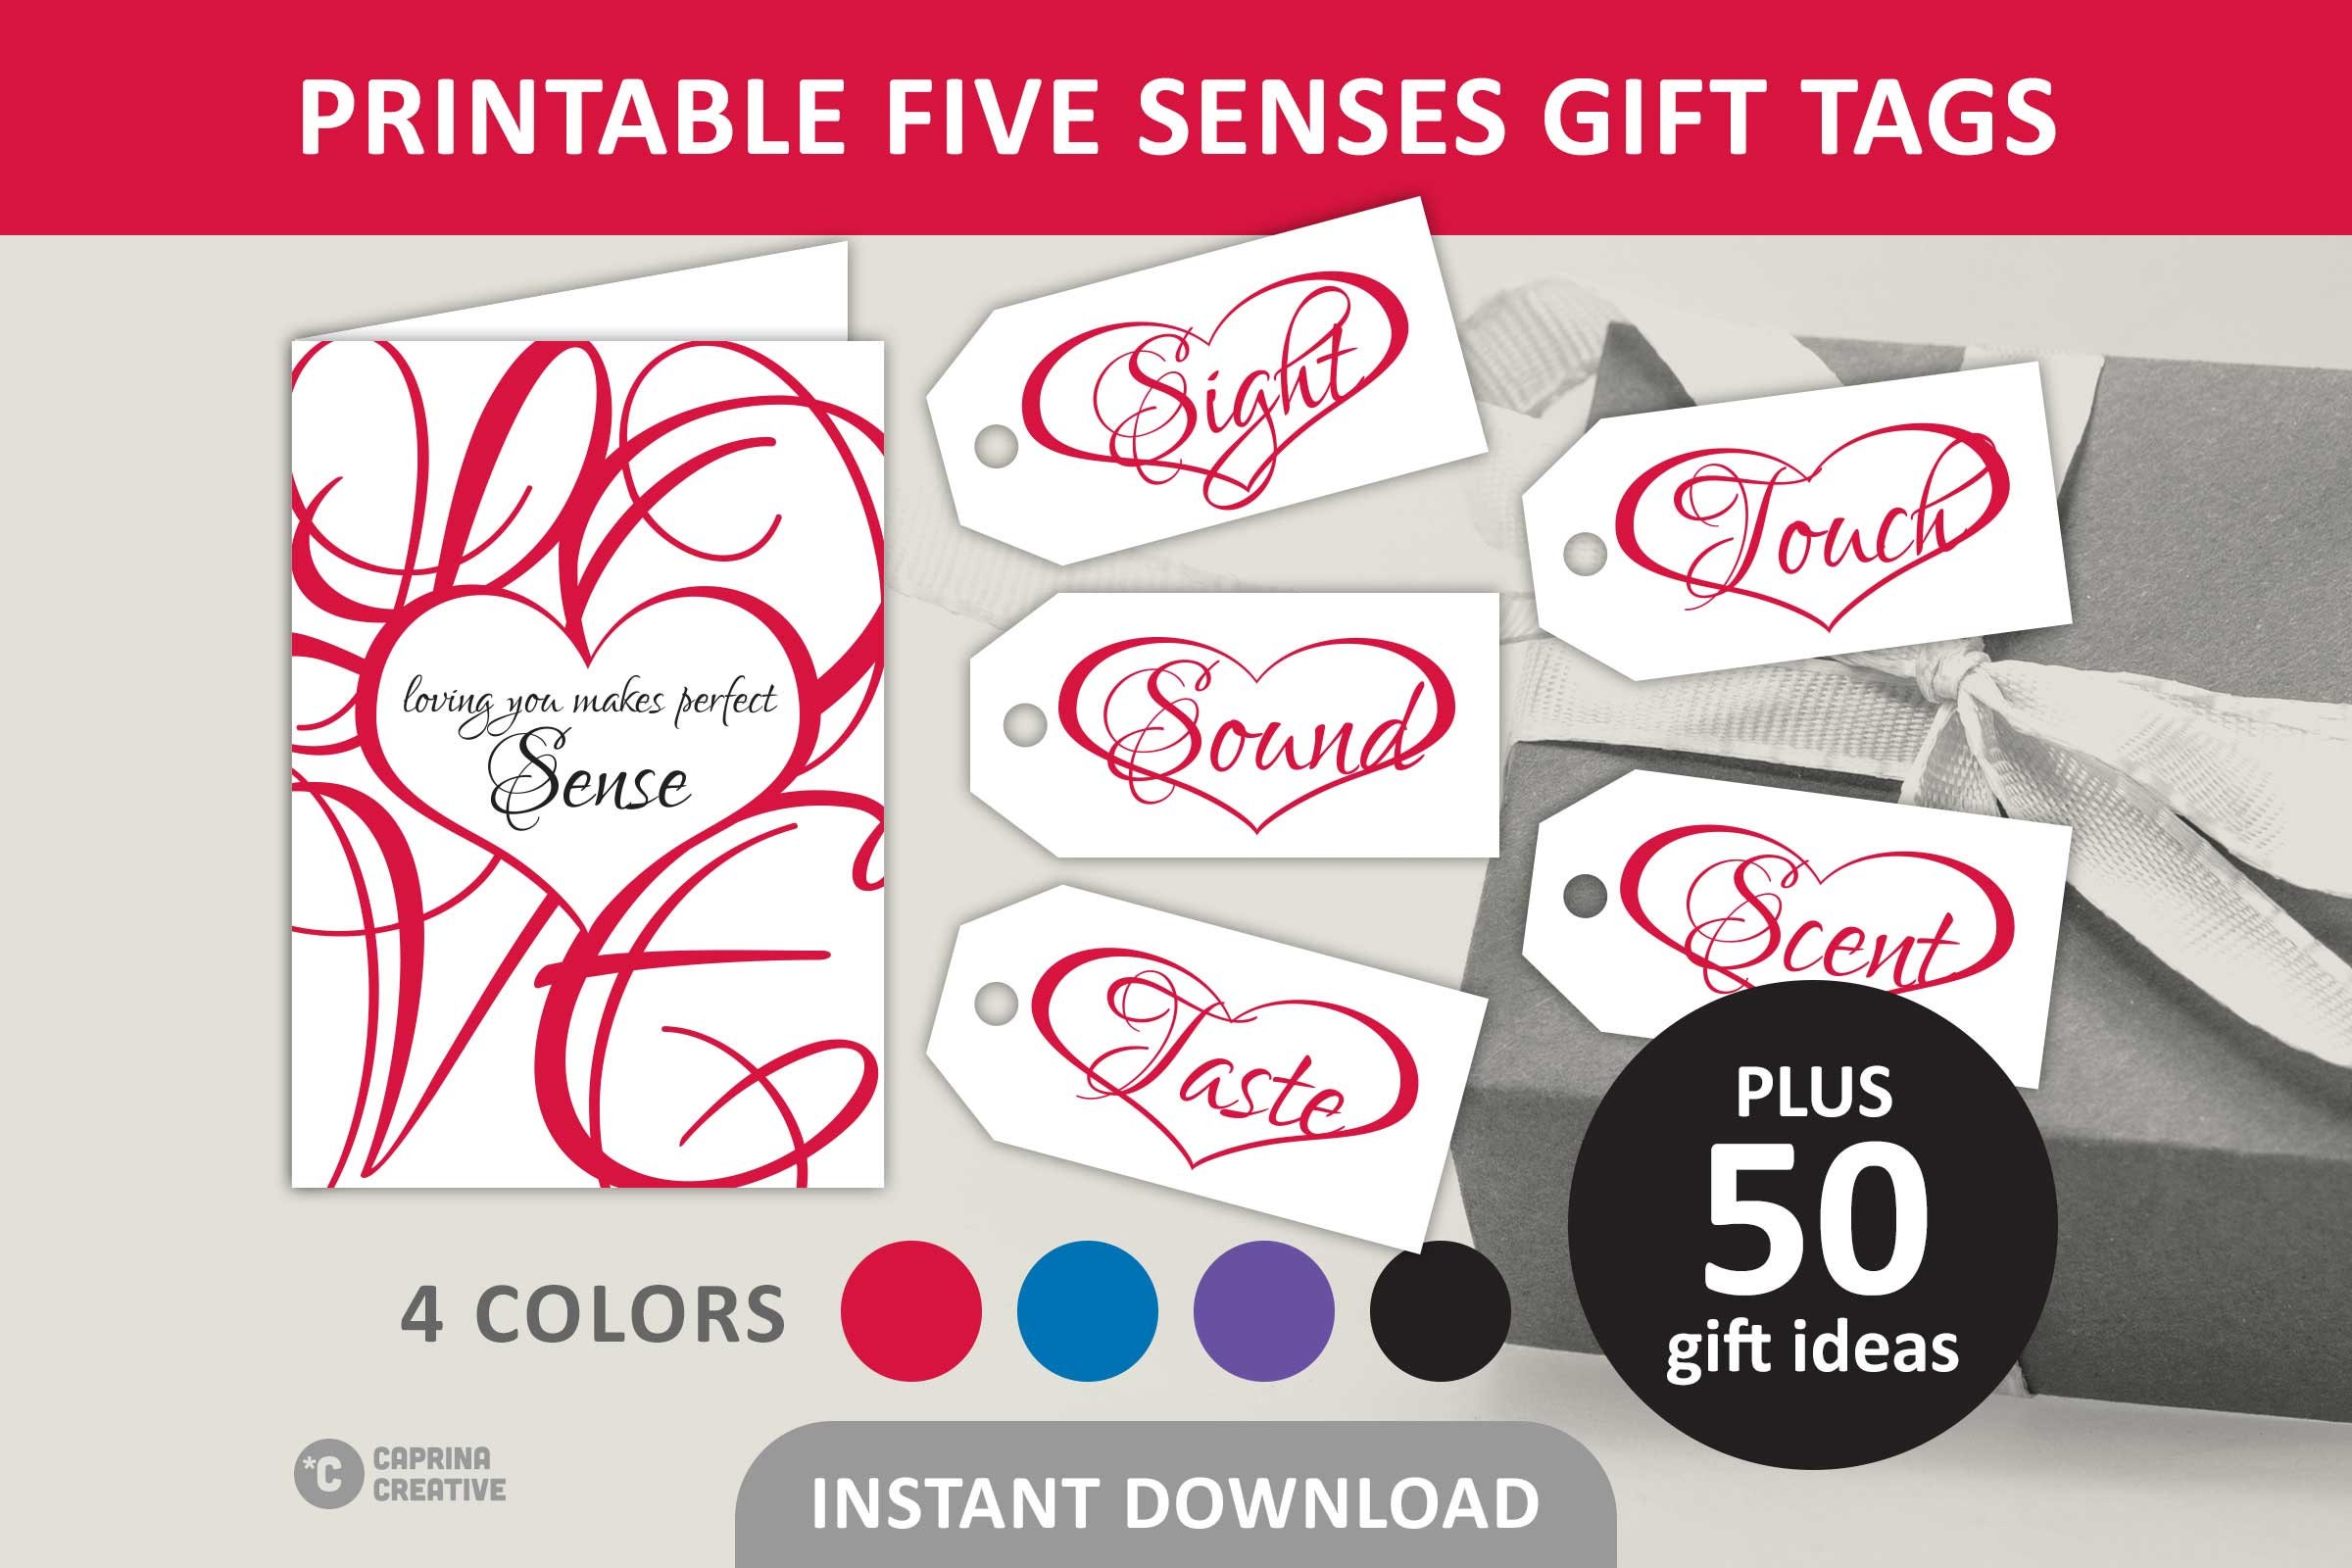 5 senses gifts for my boyfriend's birthday. #5sensesgift #birthday #bo, 5 senses gift for my boyfriend